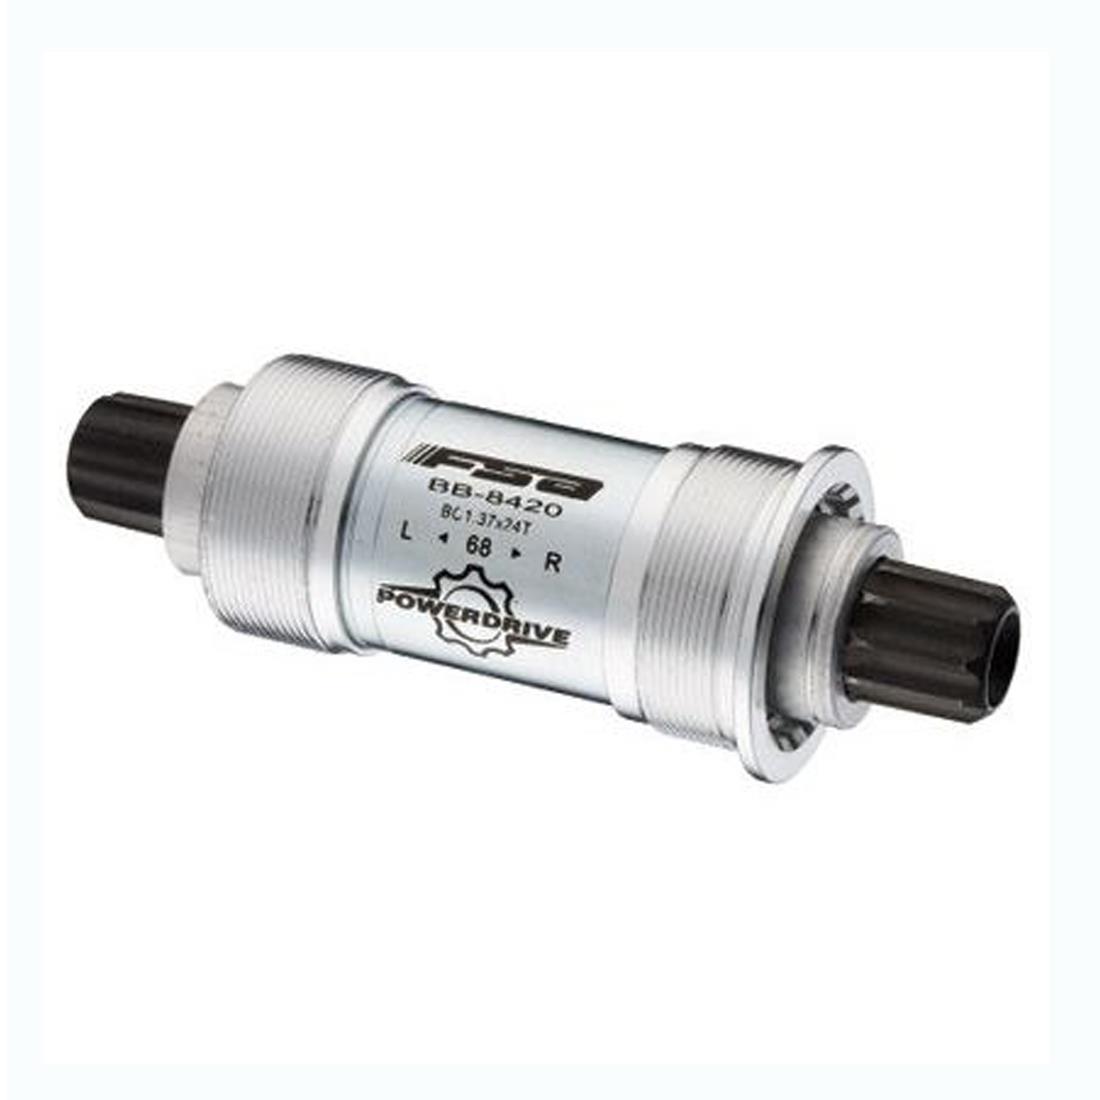 boitier de pédalier power drive bb-8420al 68x108mm